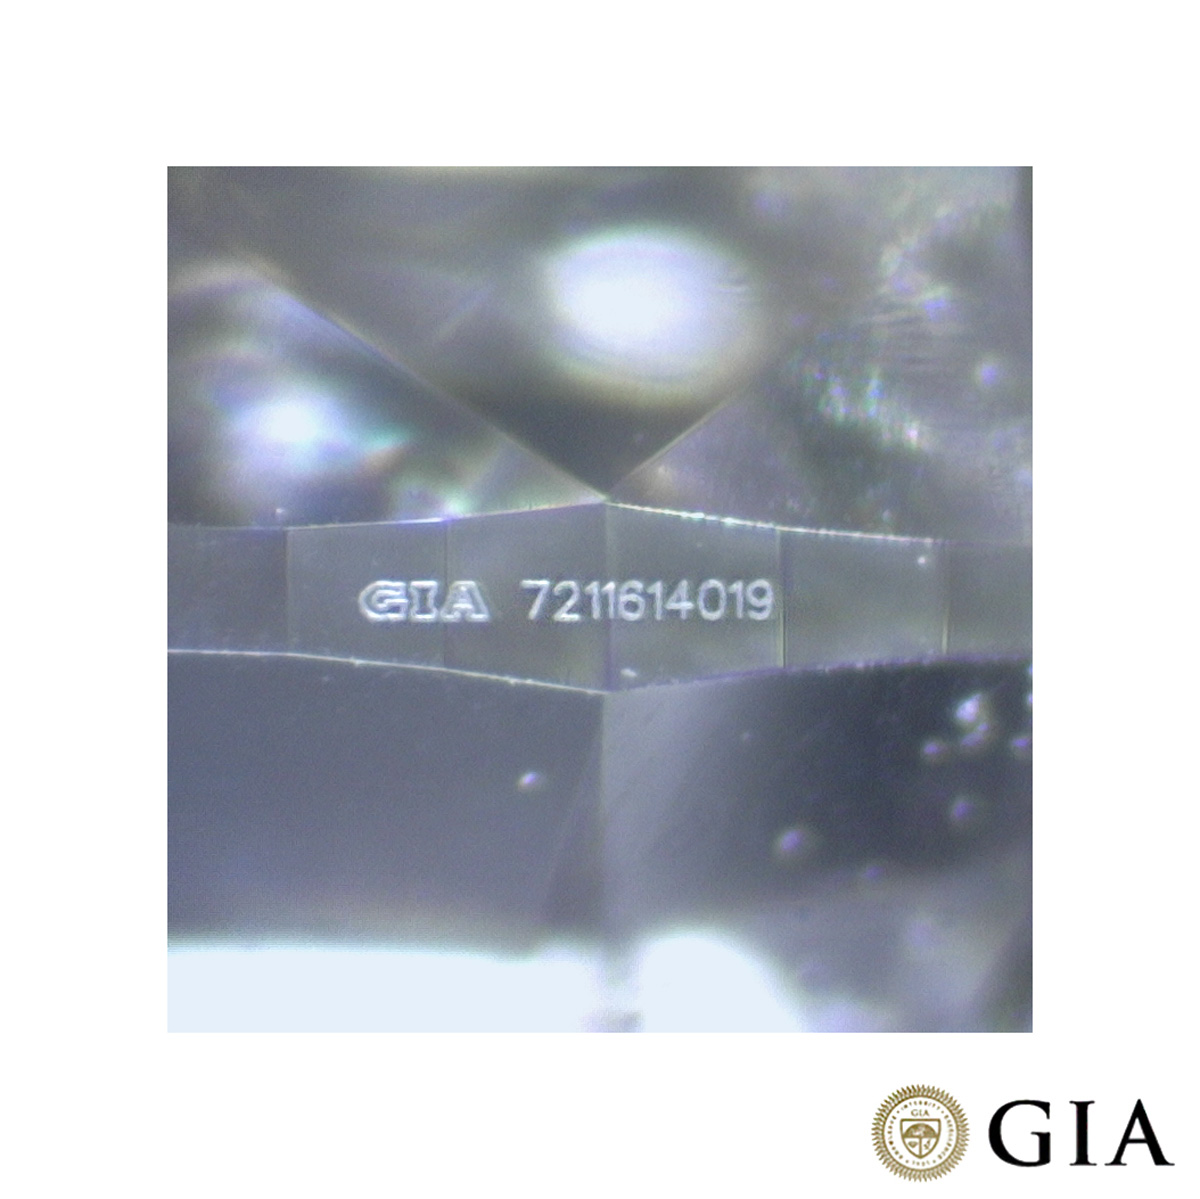 Cartier Platinum Round Brilliant Cut Diamond Solitaire 1895 Ring 1.37ct G/VVS1 XXX